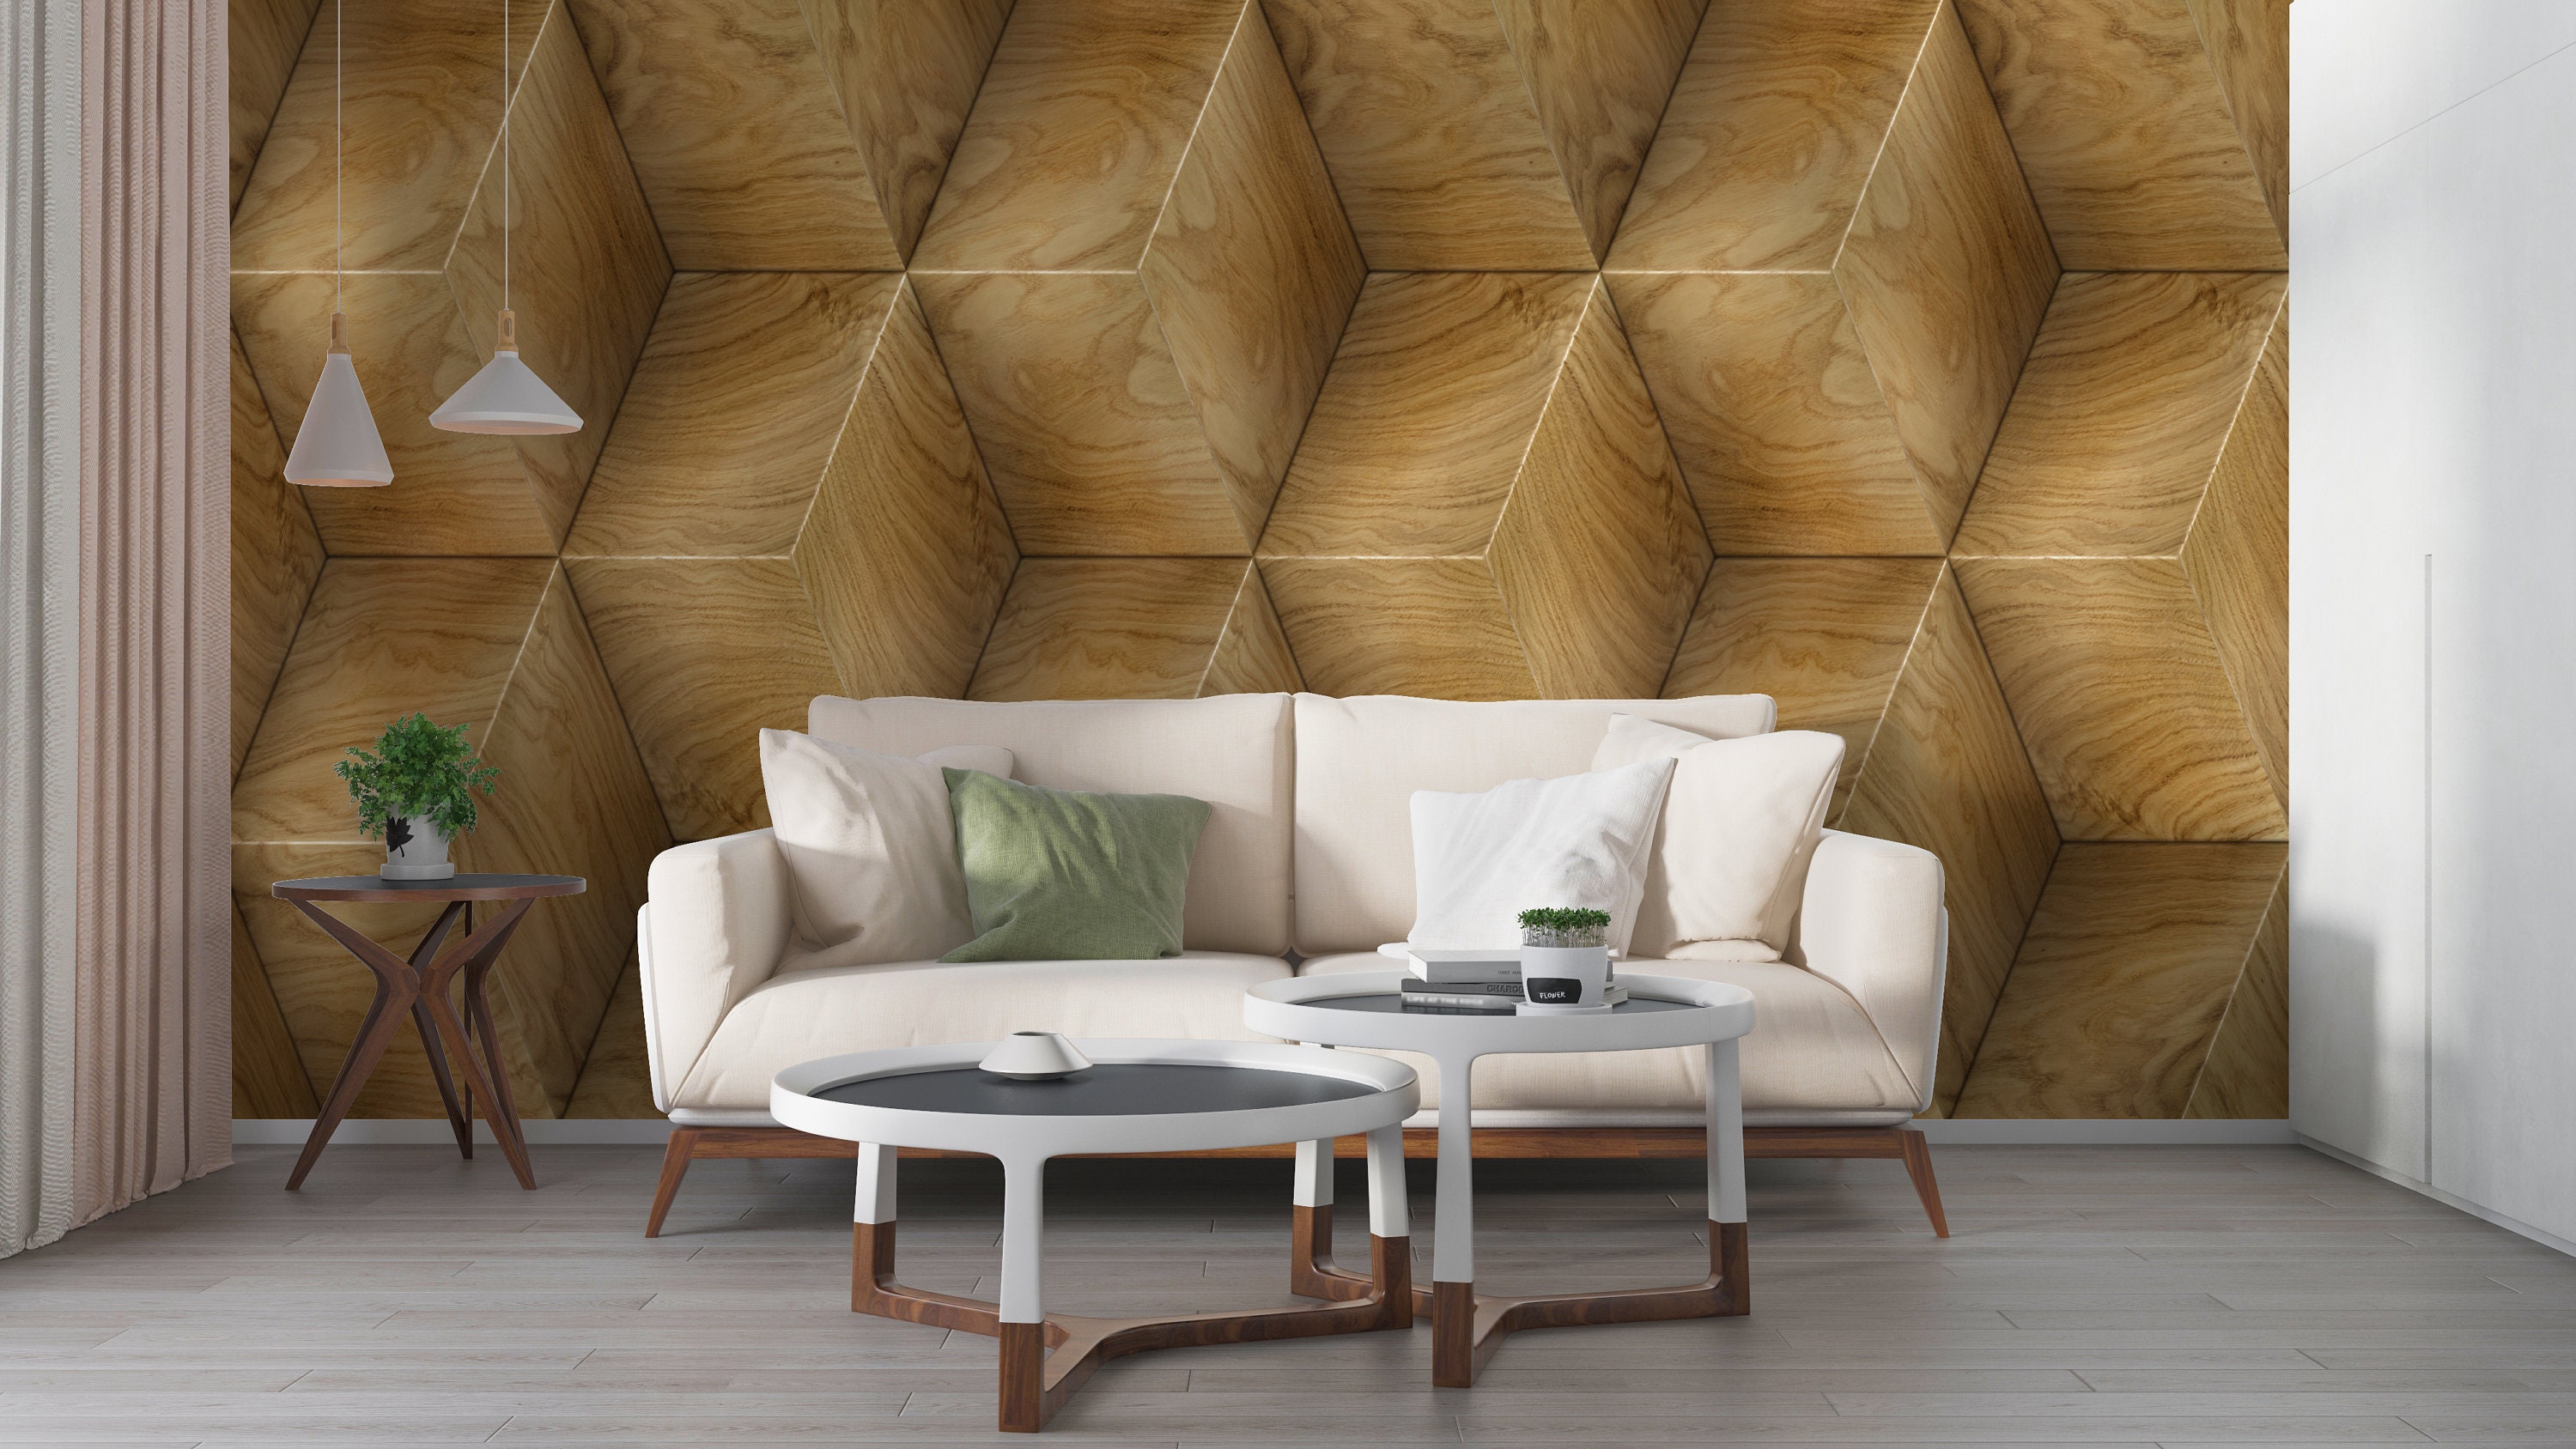 3D Wood Veneer Wallpaper Peel and Stick Hexagonal Oak Look - Etsy